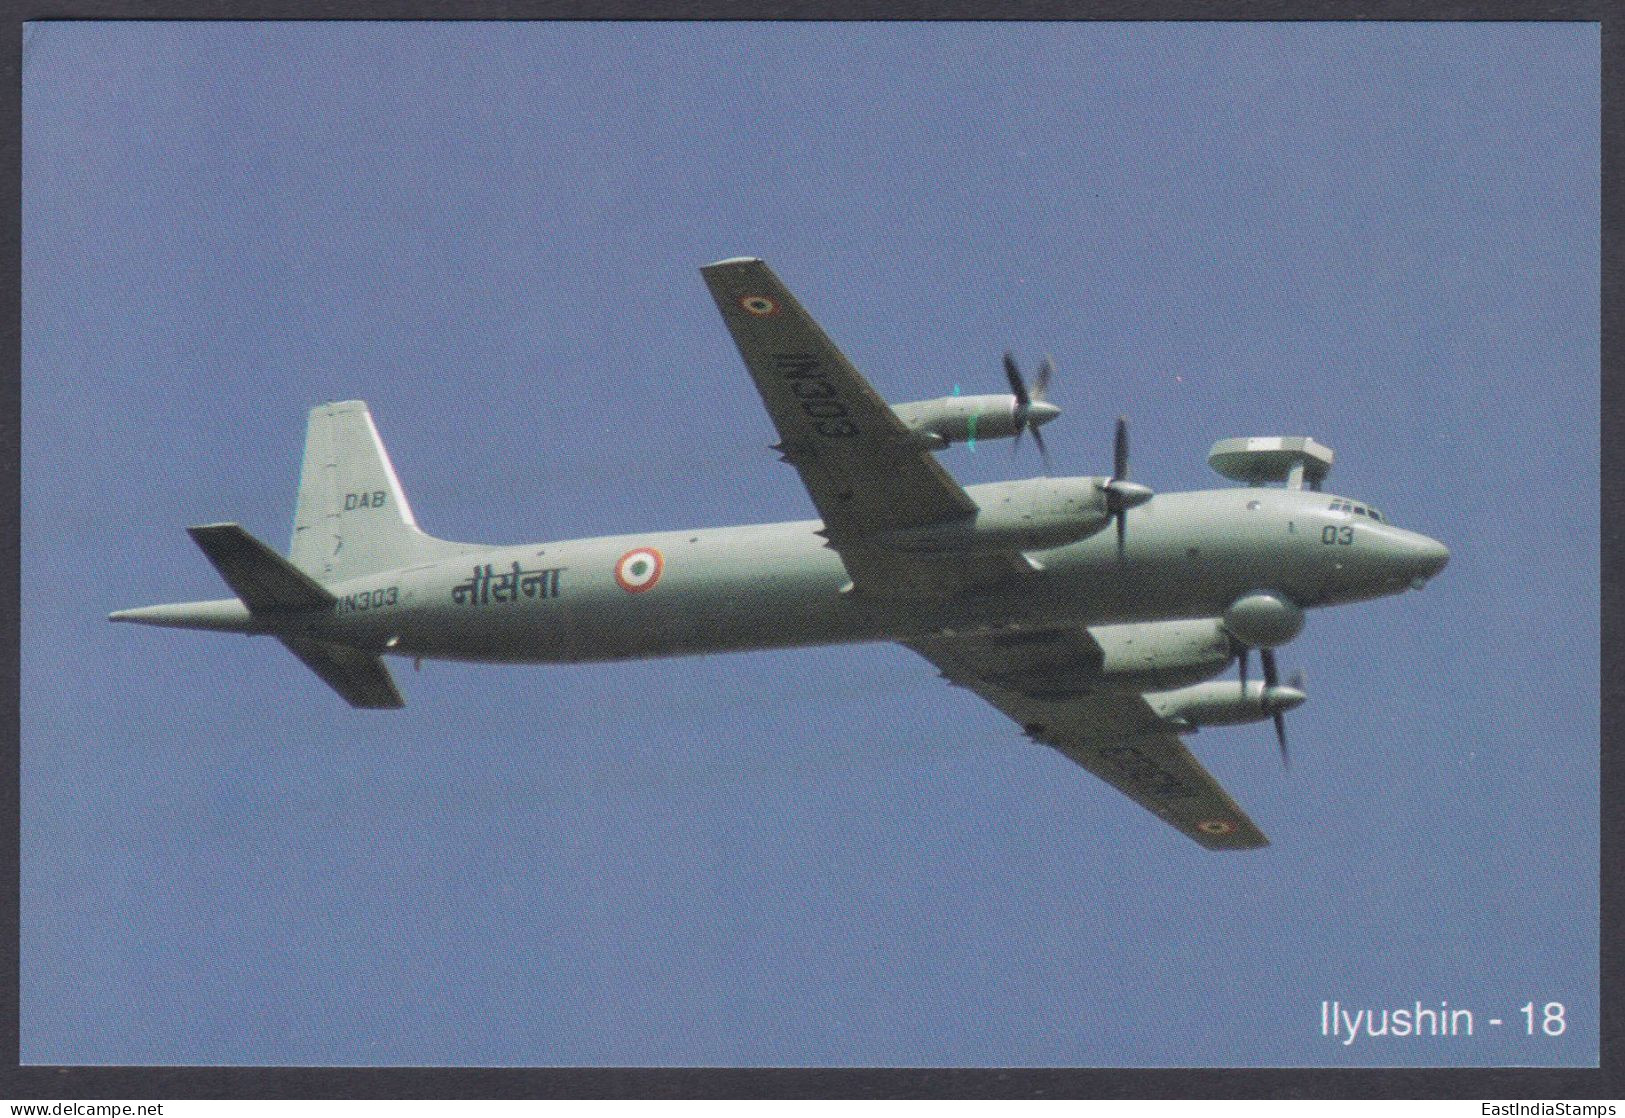 Inde India 2007 Mint Postcard Bangalore Air Show Ilyushin - 18, Indian Navy, Naval, Aircraft, Aeroplane, Airplane - Inde